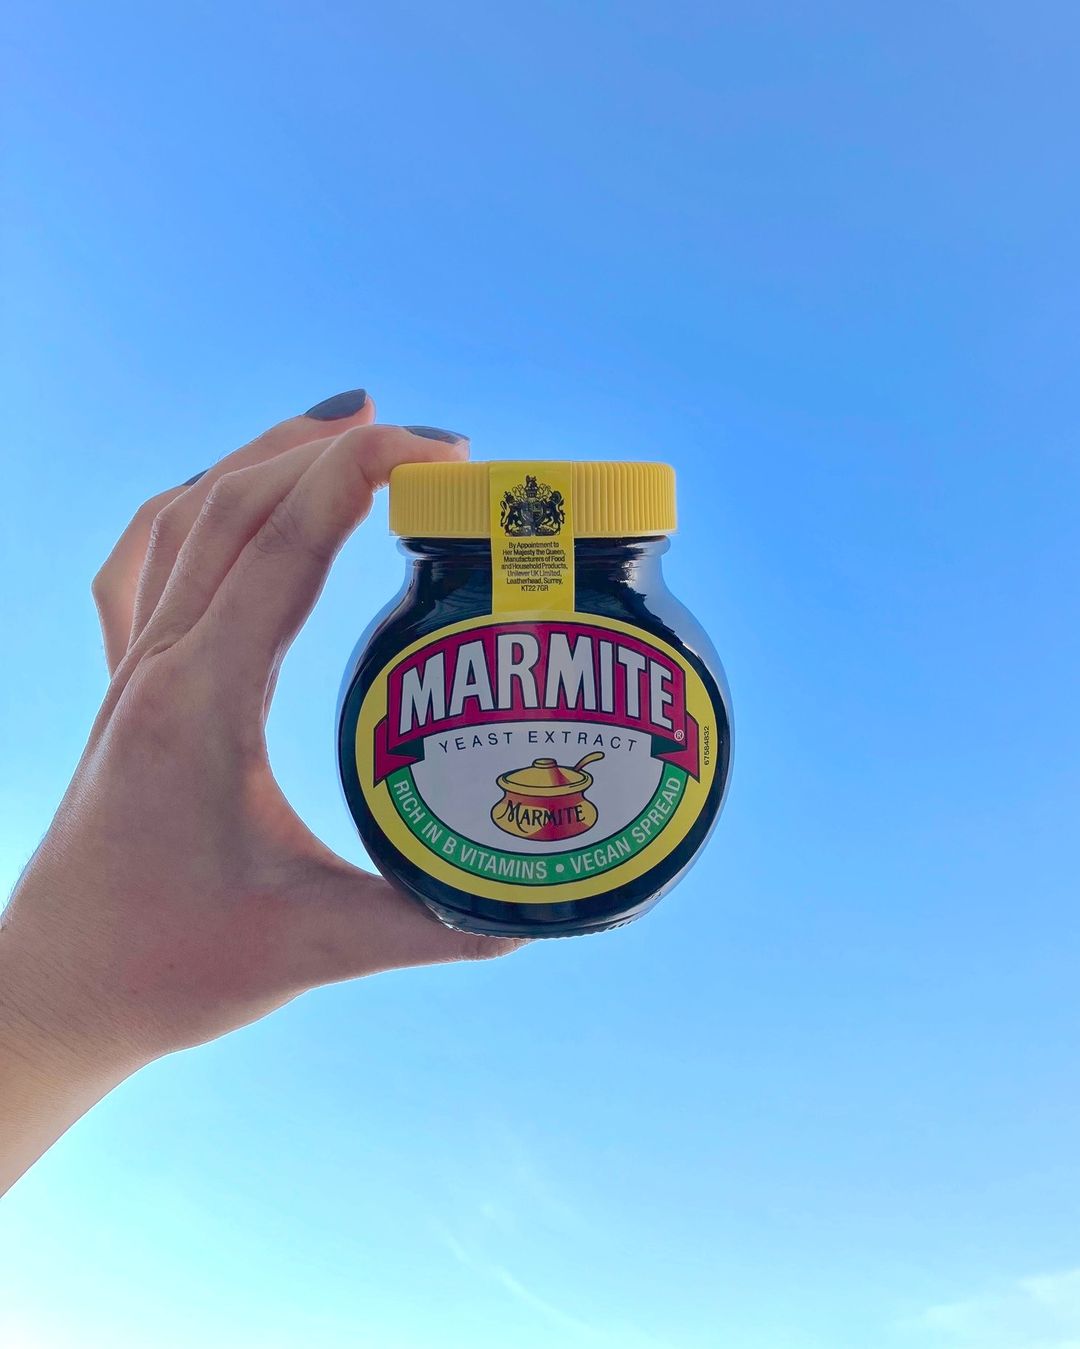 VegNews.marmite